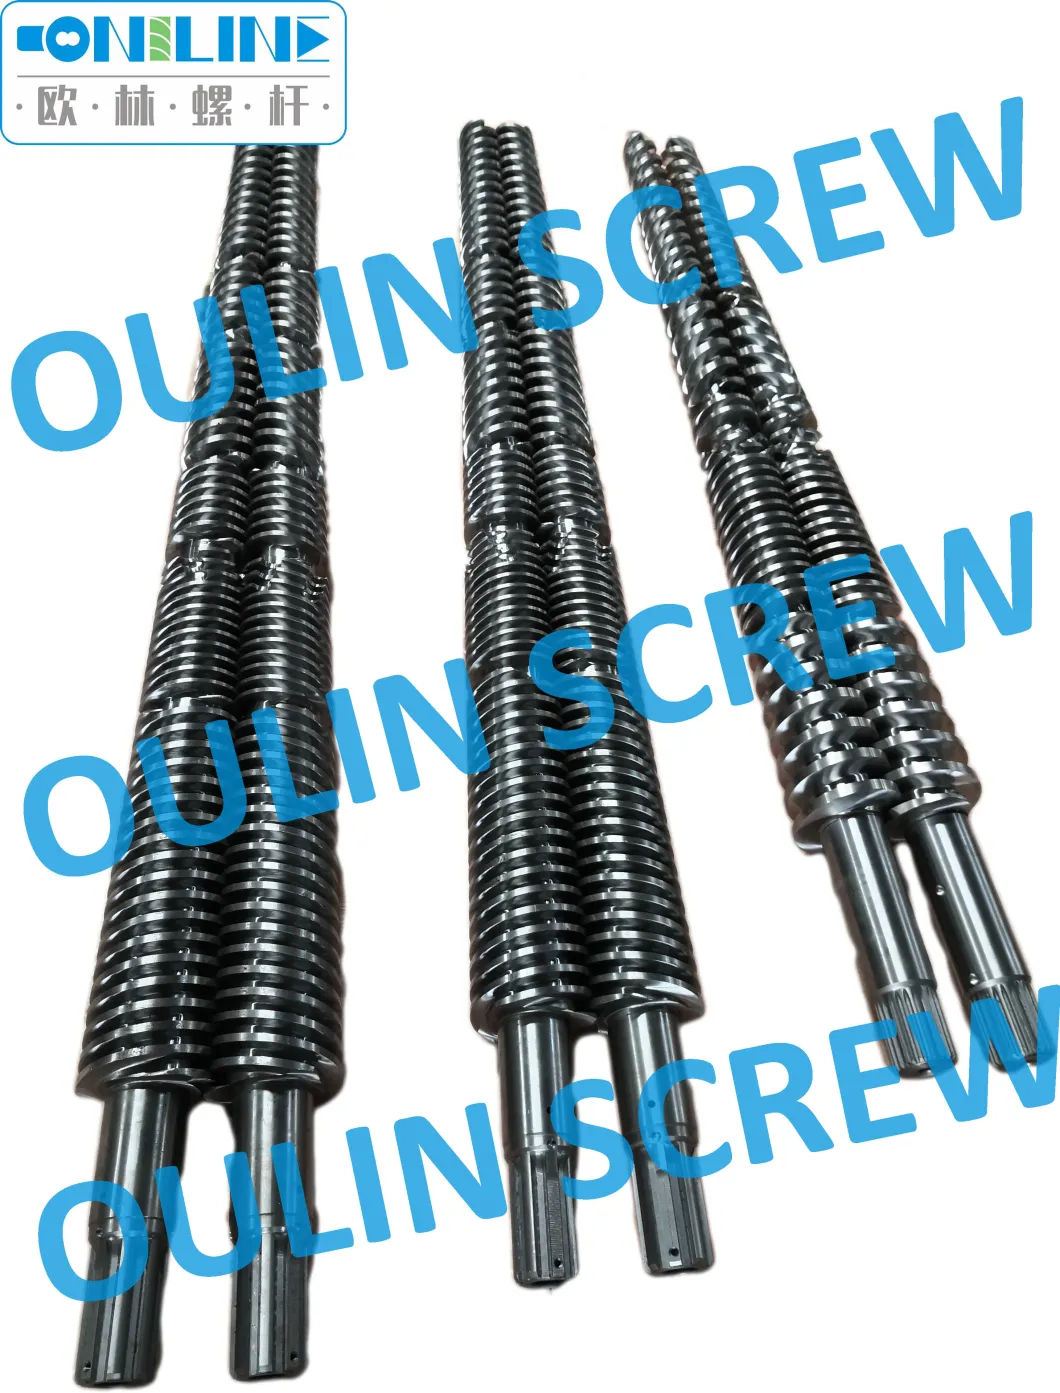 Cincinnati 80/143, 58/146 Bimetallic Twin Conical Screw and Barrel for Sheet